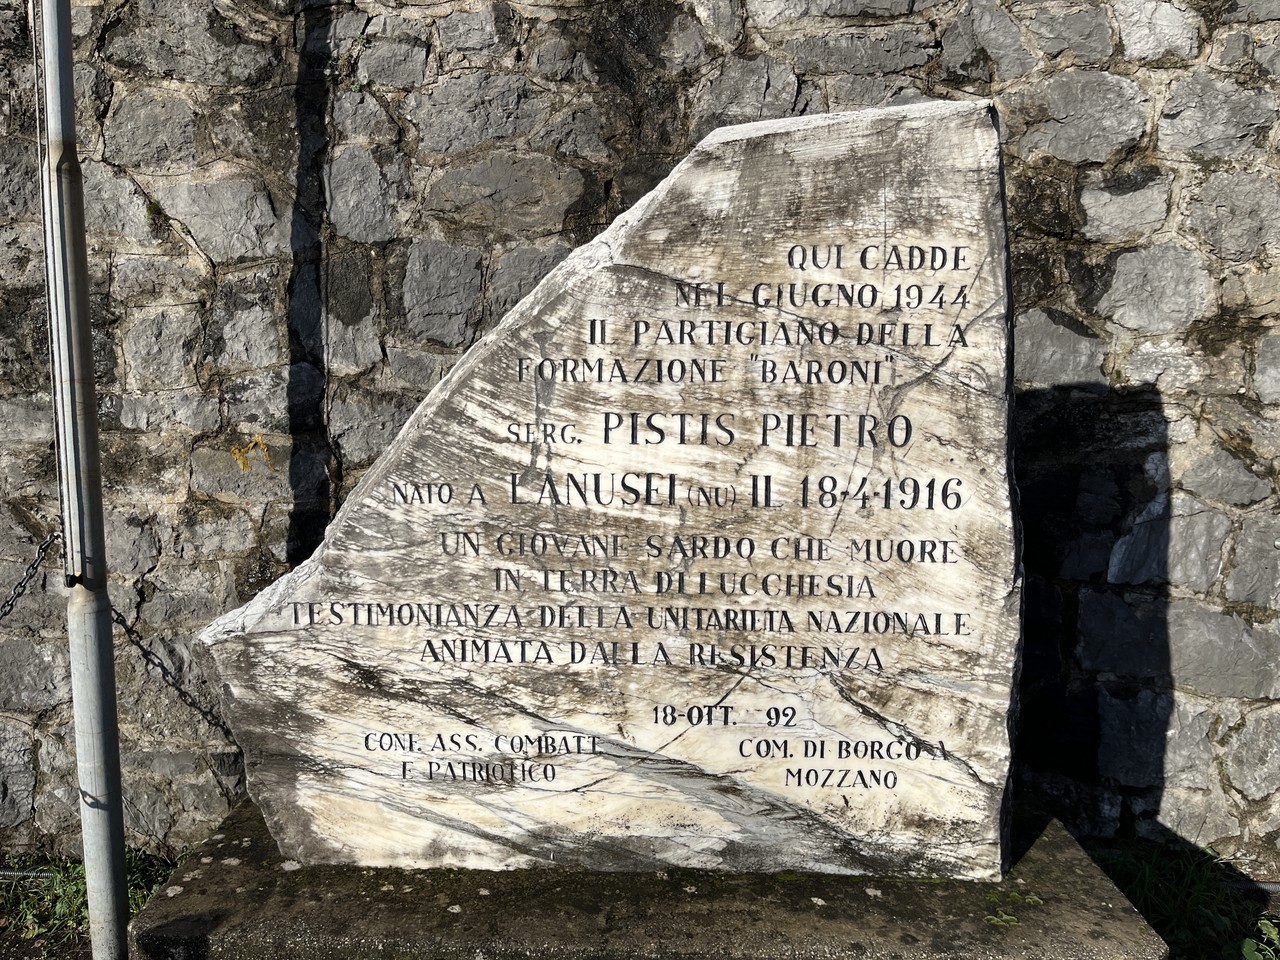 Memorial stone in memory of partisan Pietro Pistis